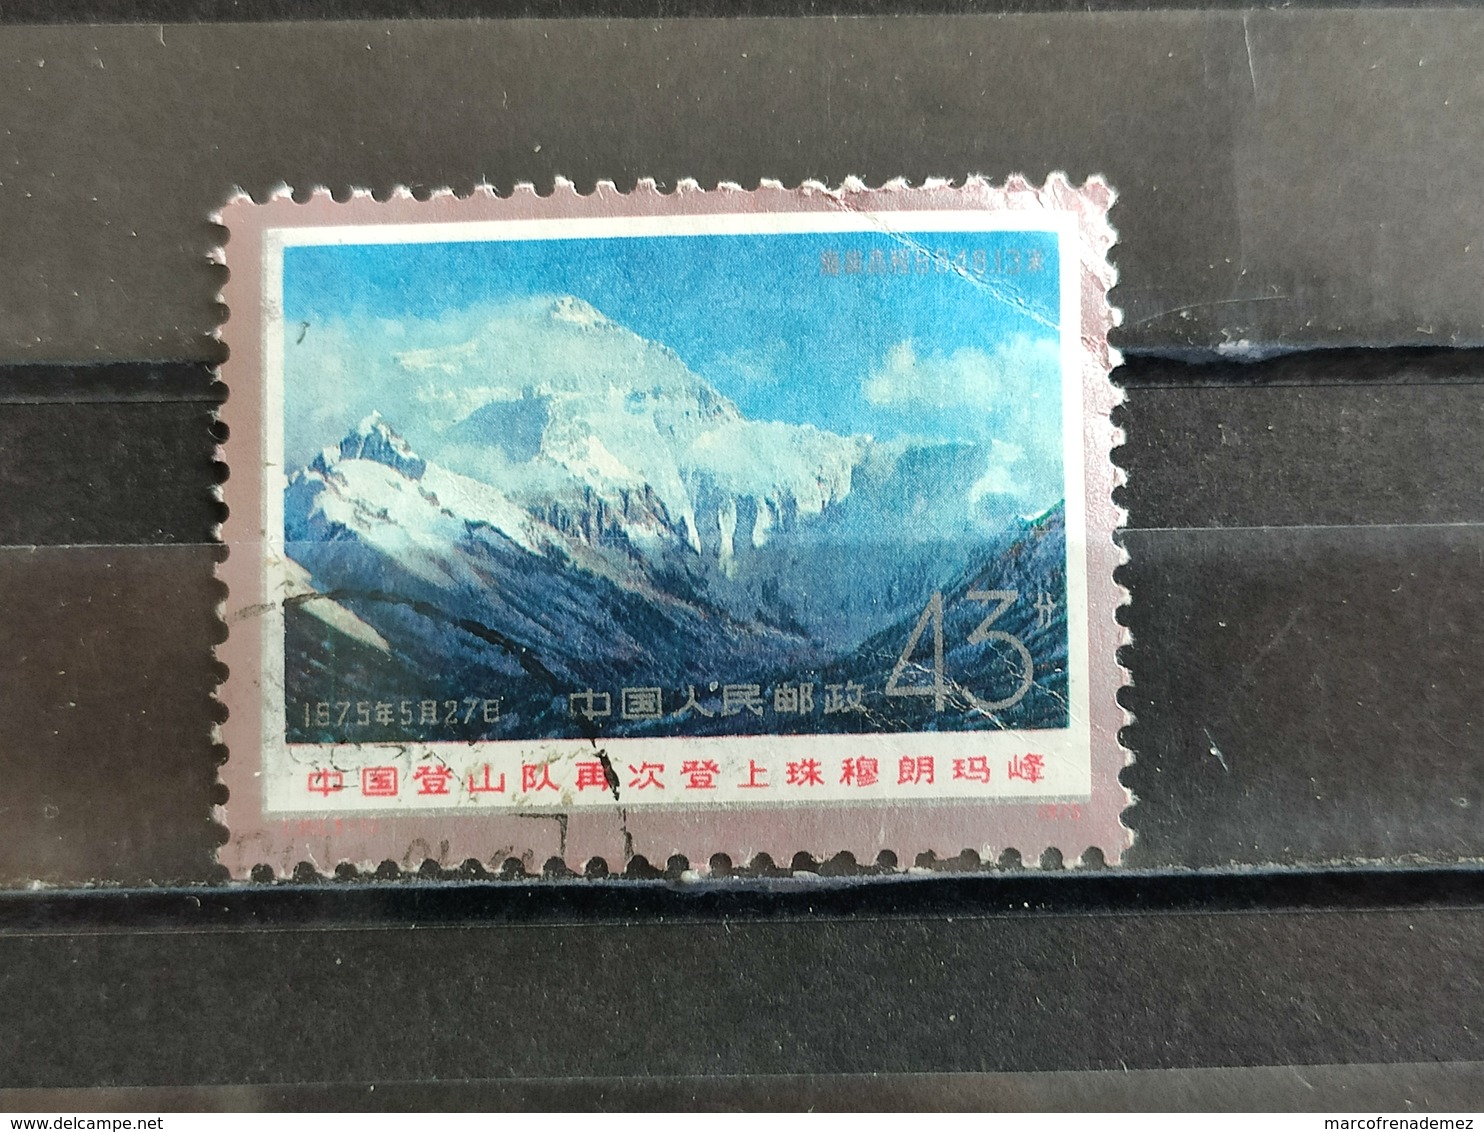 1975, REP. POPOLARE CINESE, Scalata Del Monte Everest - Used Stamps